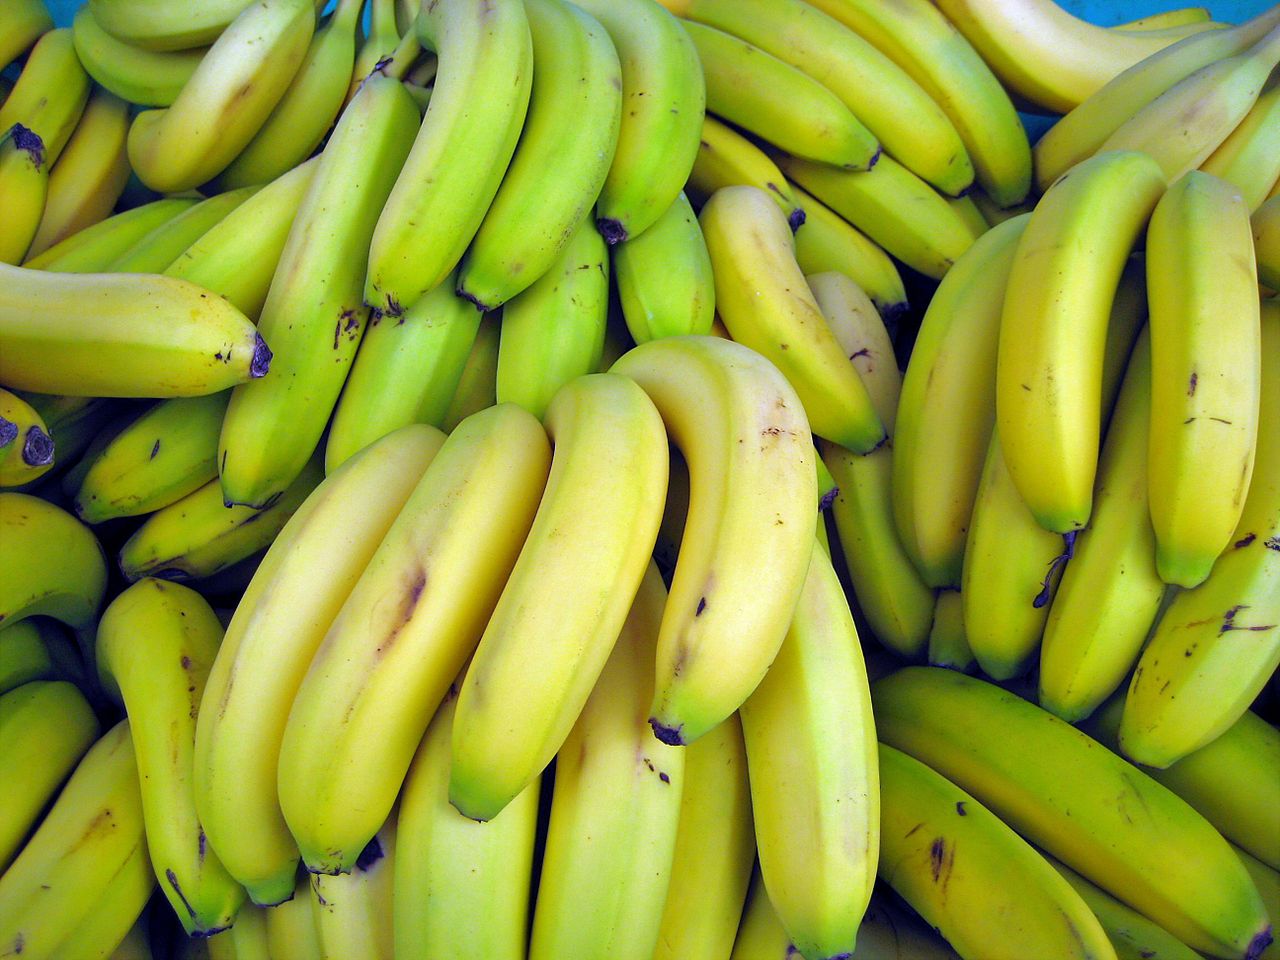 Risks of fusarium wilt spreading among Philippine bananas